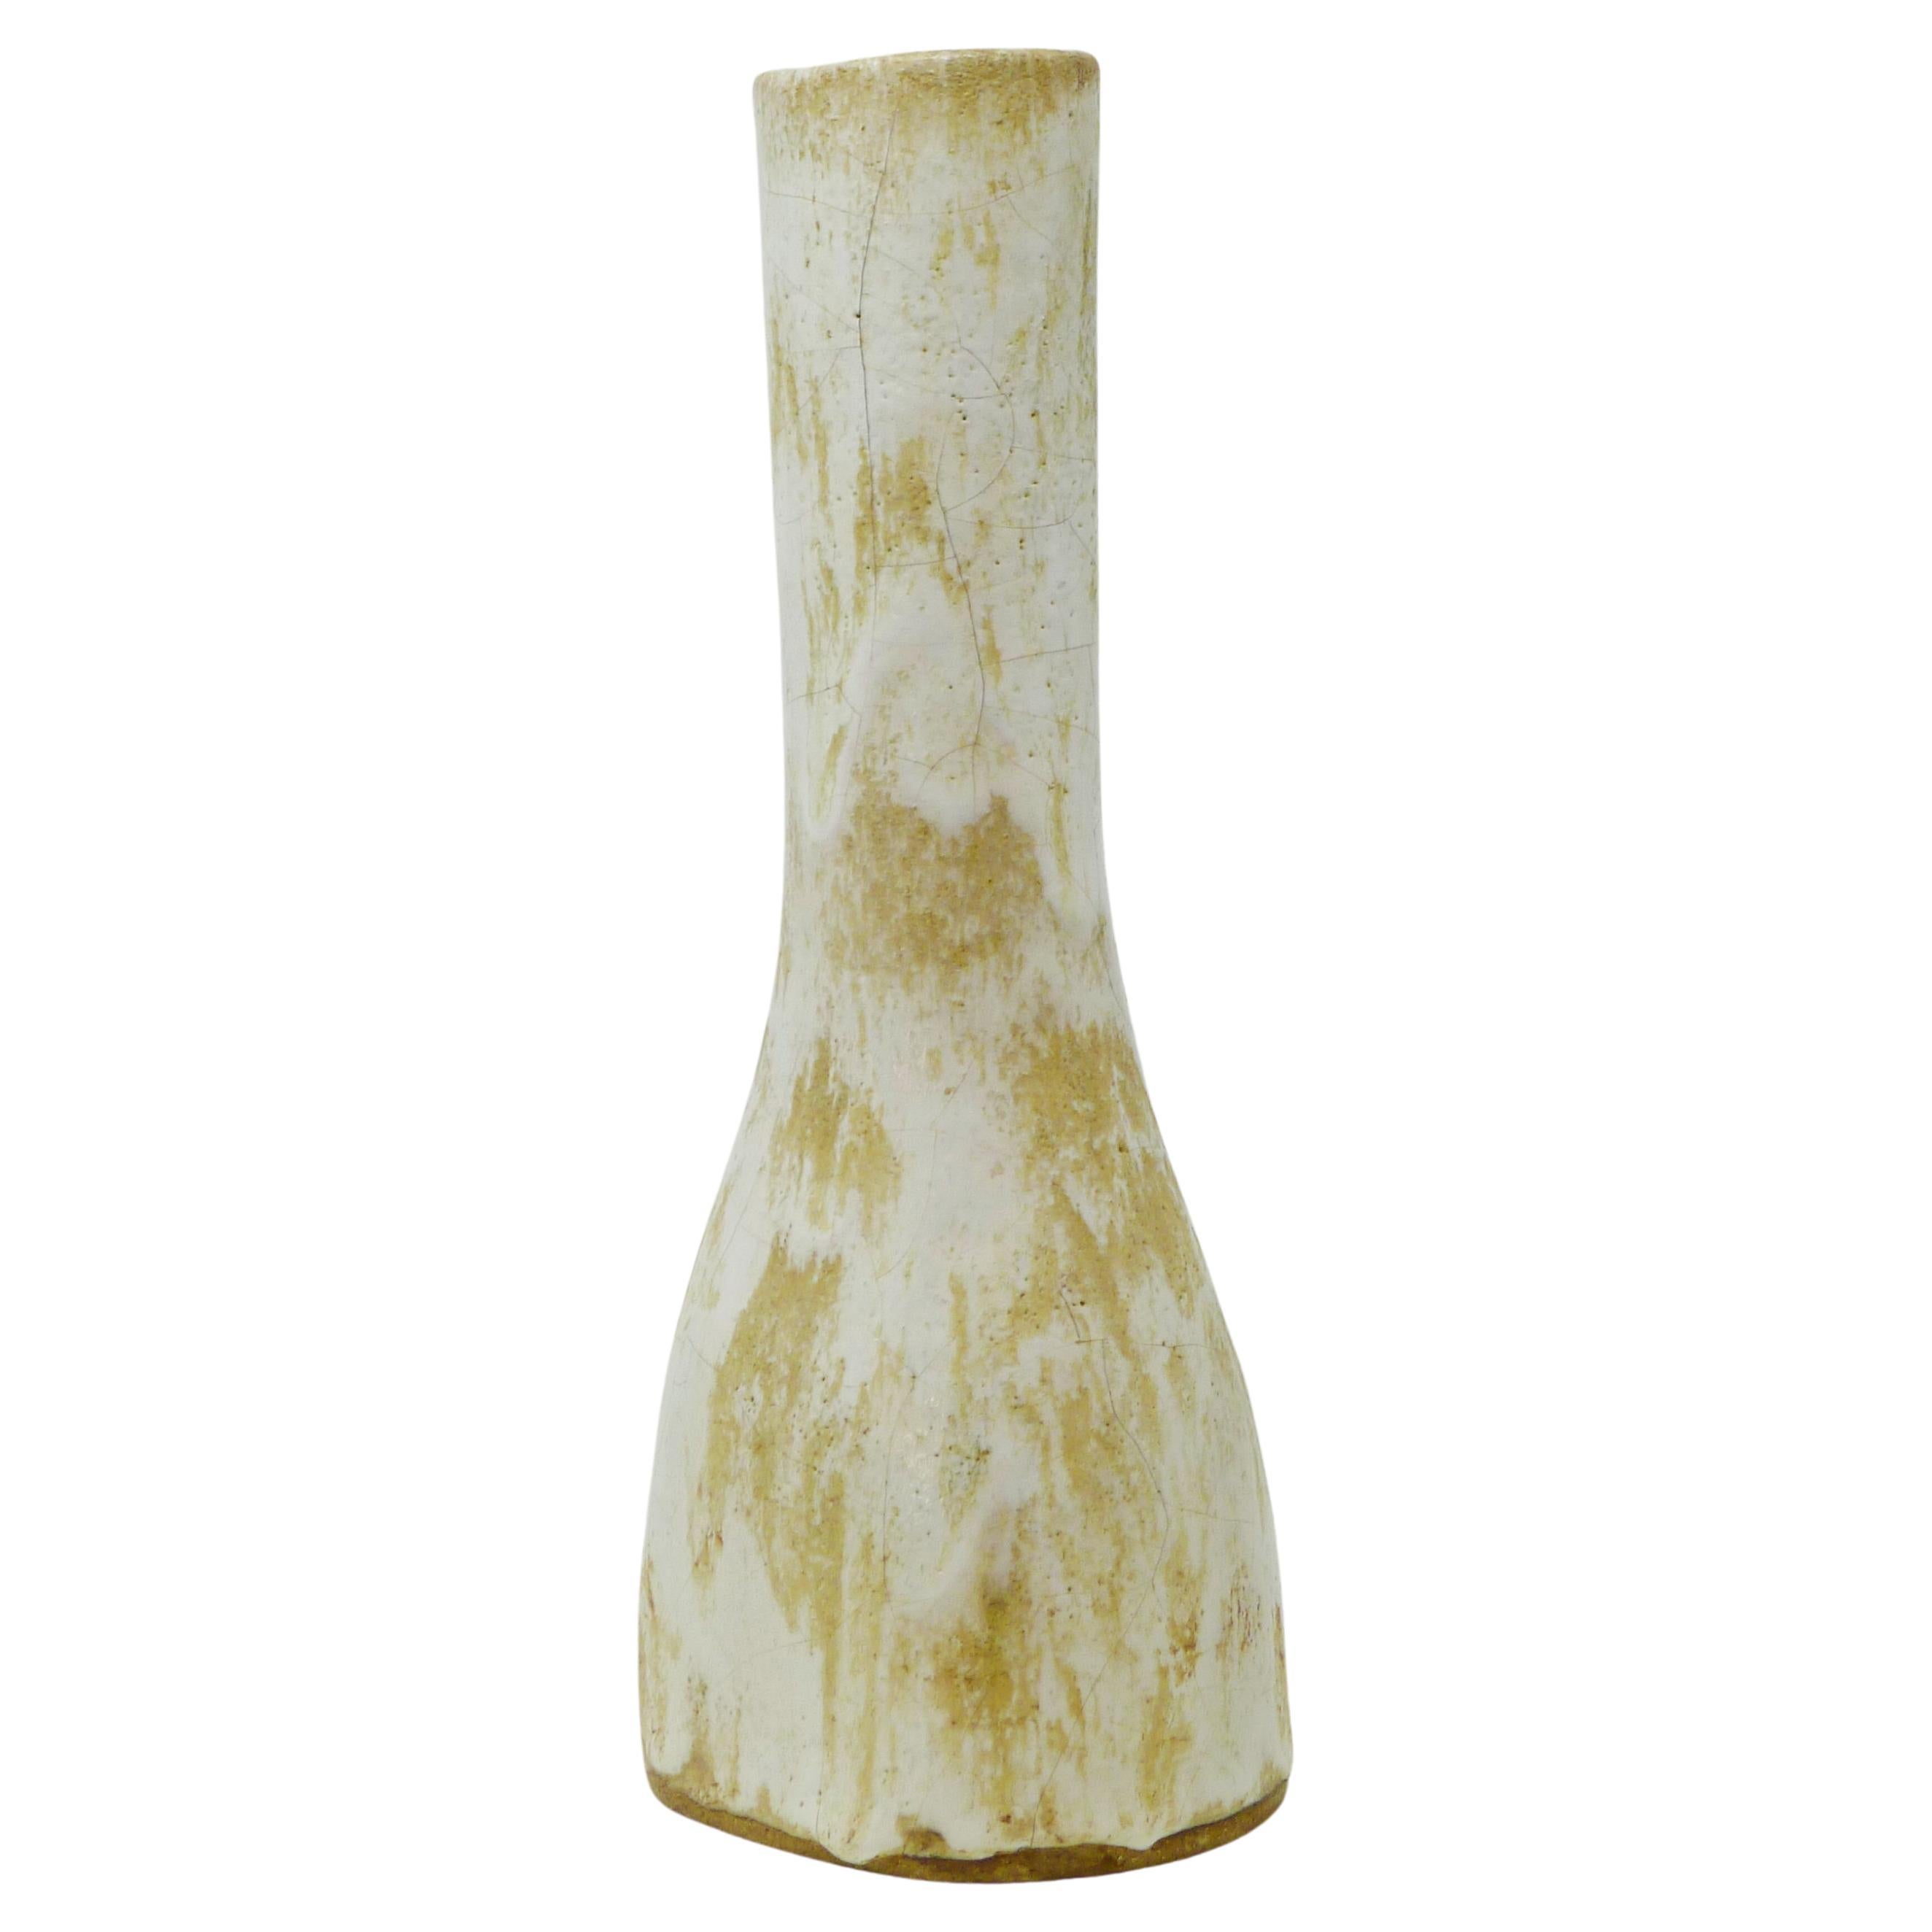 Lucie Rie, Tall Stoneware Vase, circa 1978, impressed seal mark